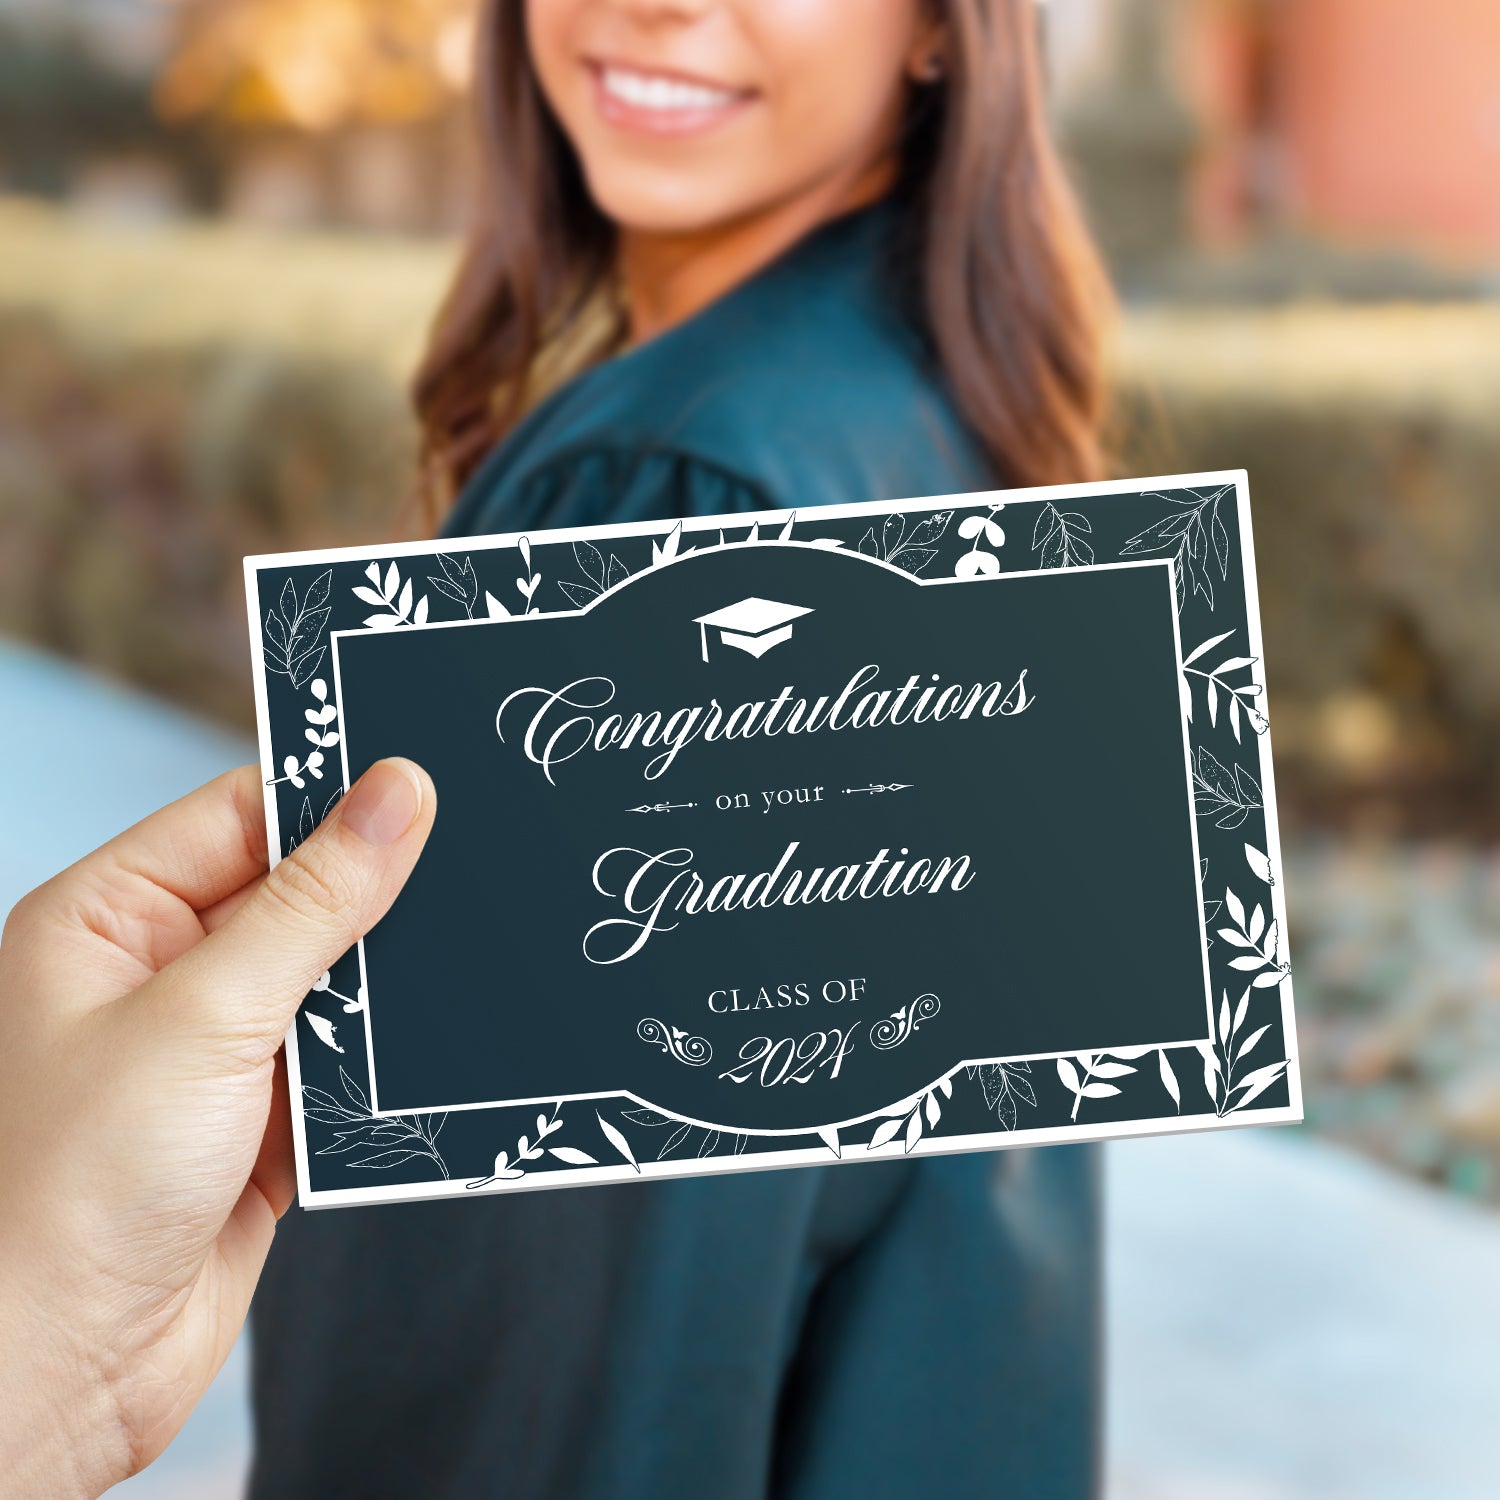 Congrats Graduation Cards - Class of 2024 (Pack of 5)